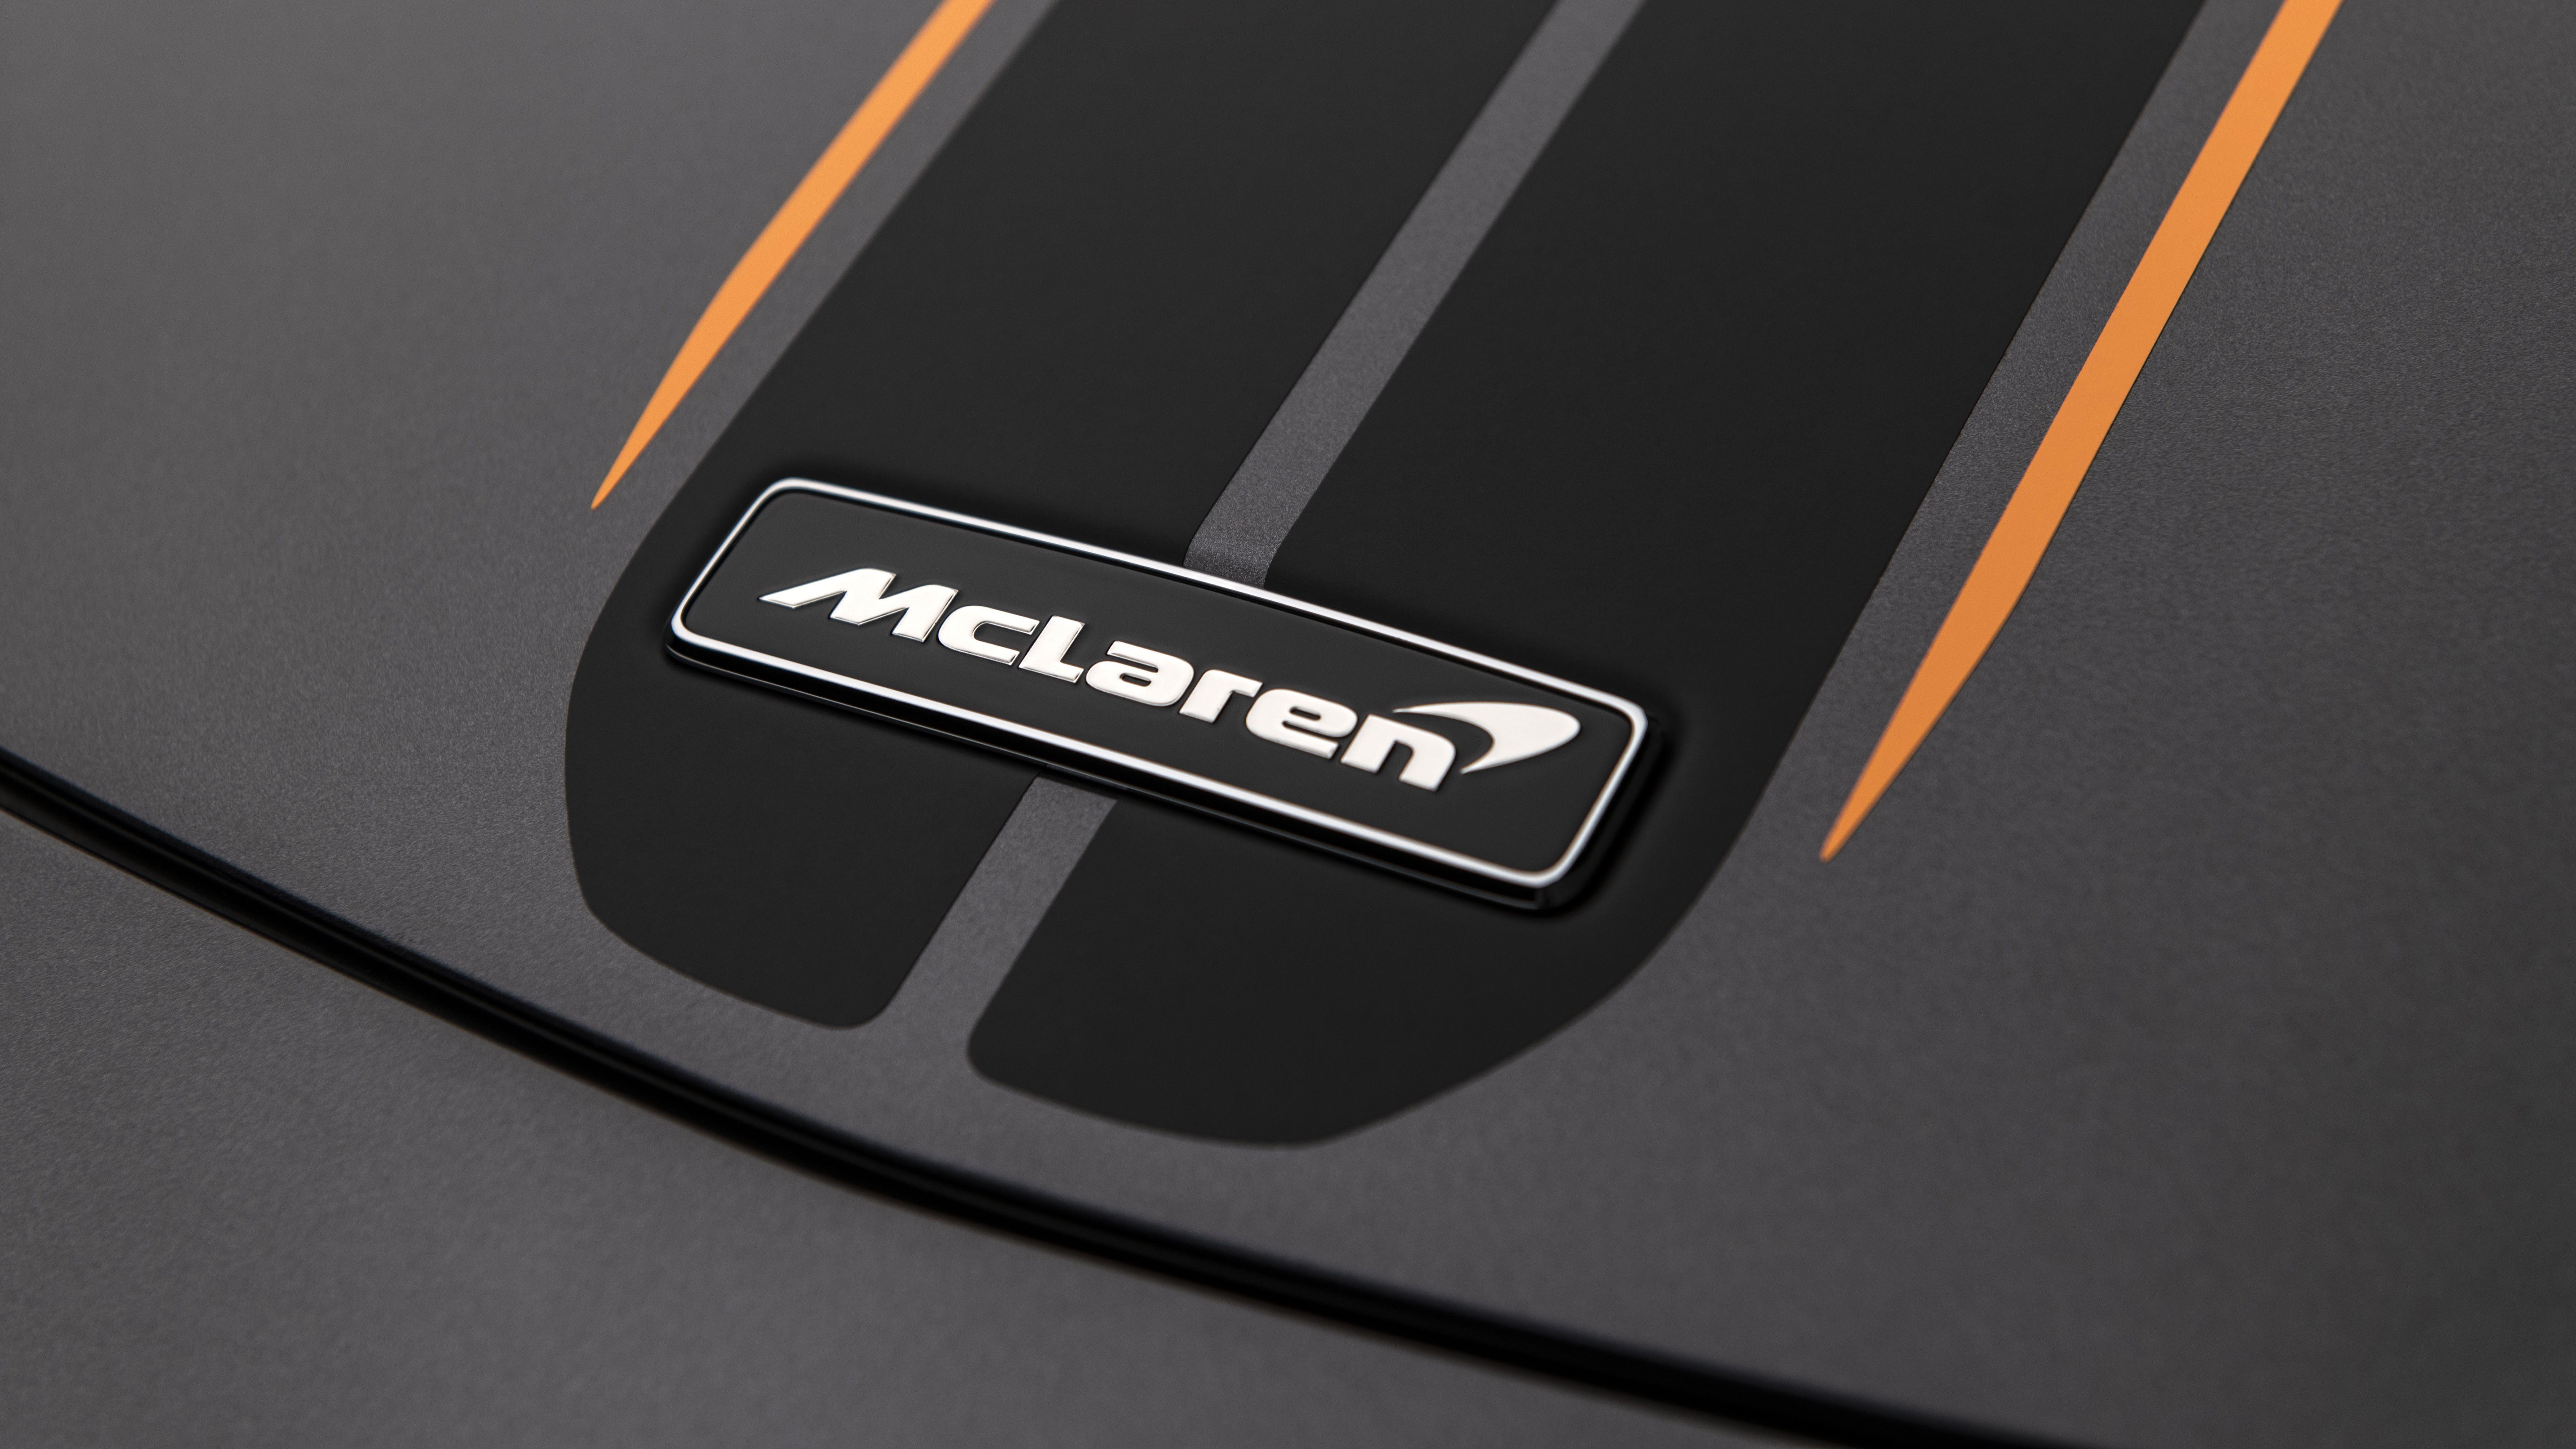 7680x4320 Hình nền McLaren Logo 4K 8K